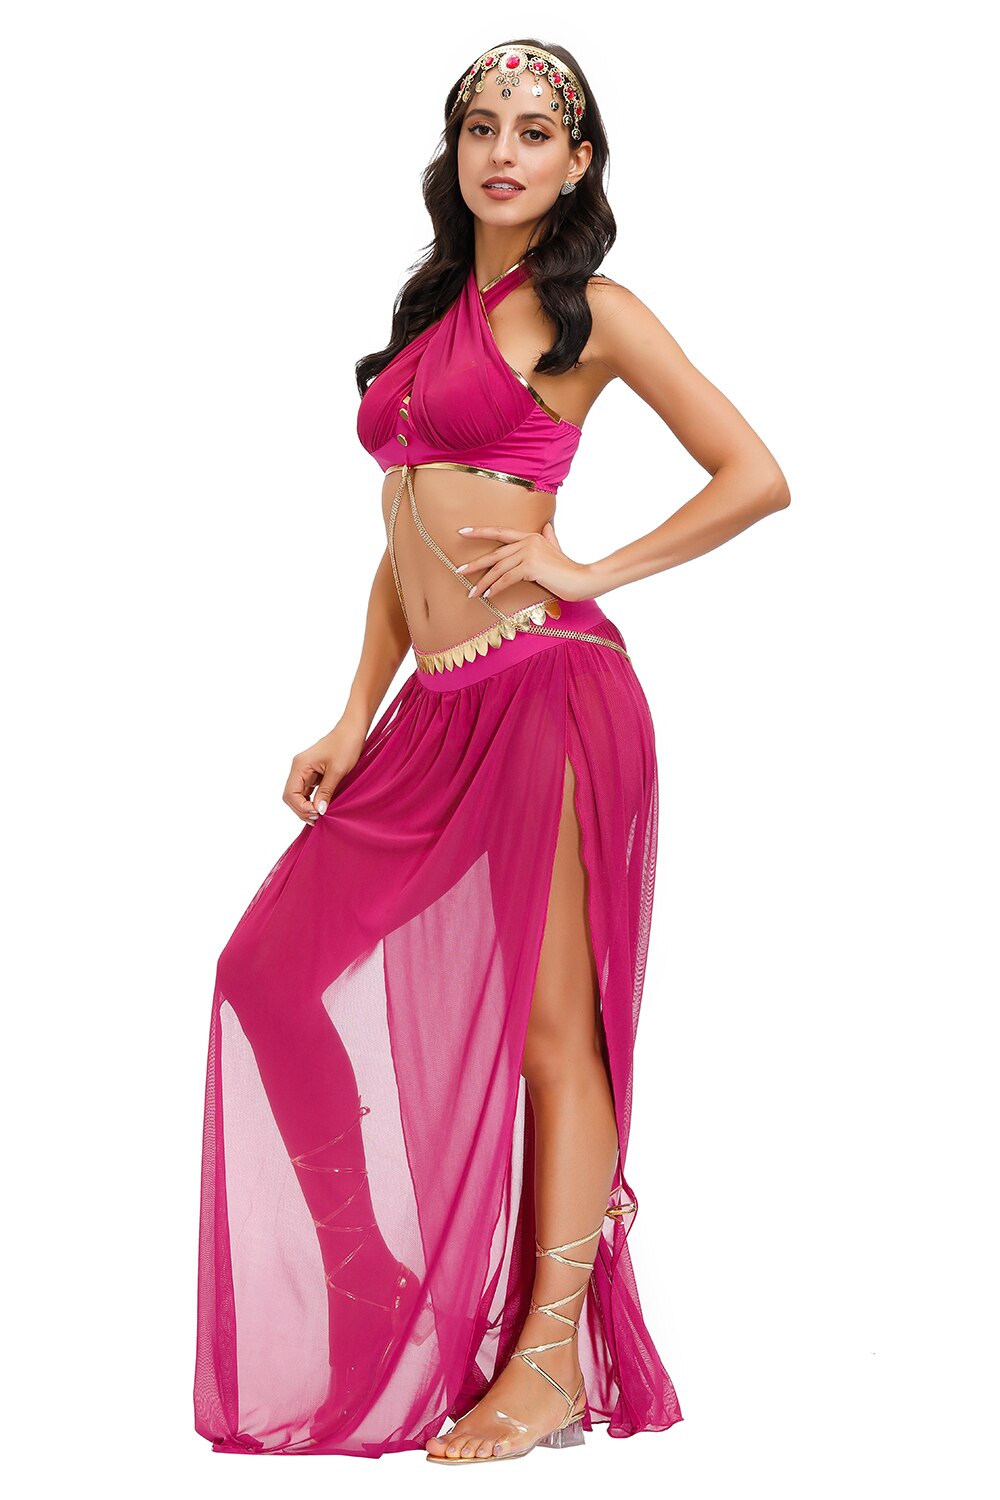 Women Sexy Belly Dance Jasmine Princess Costume Outfit Set Bras+ Skirt + Headwear Female Bollywood Dance Dresses